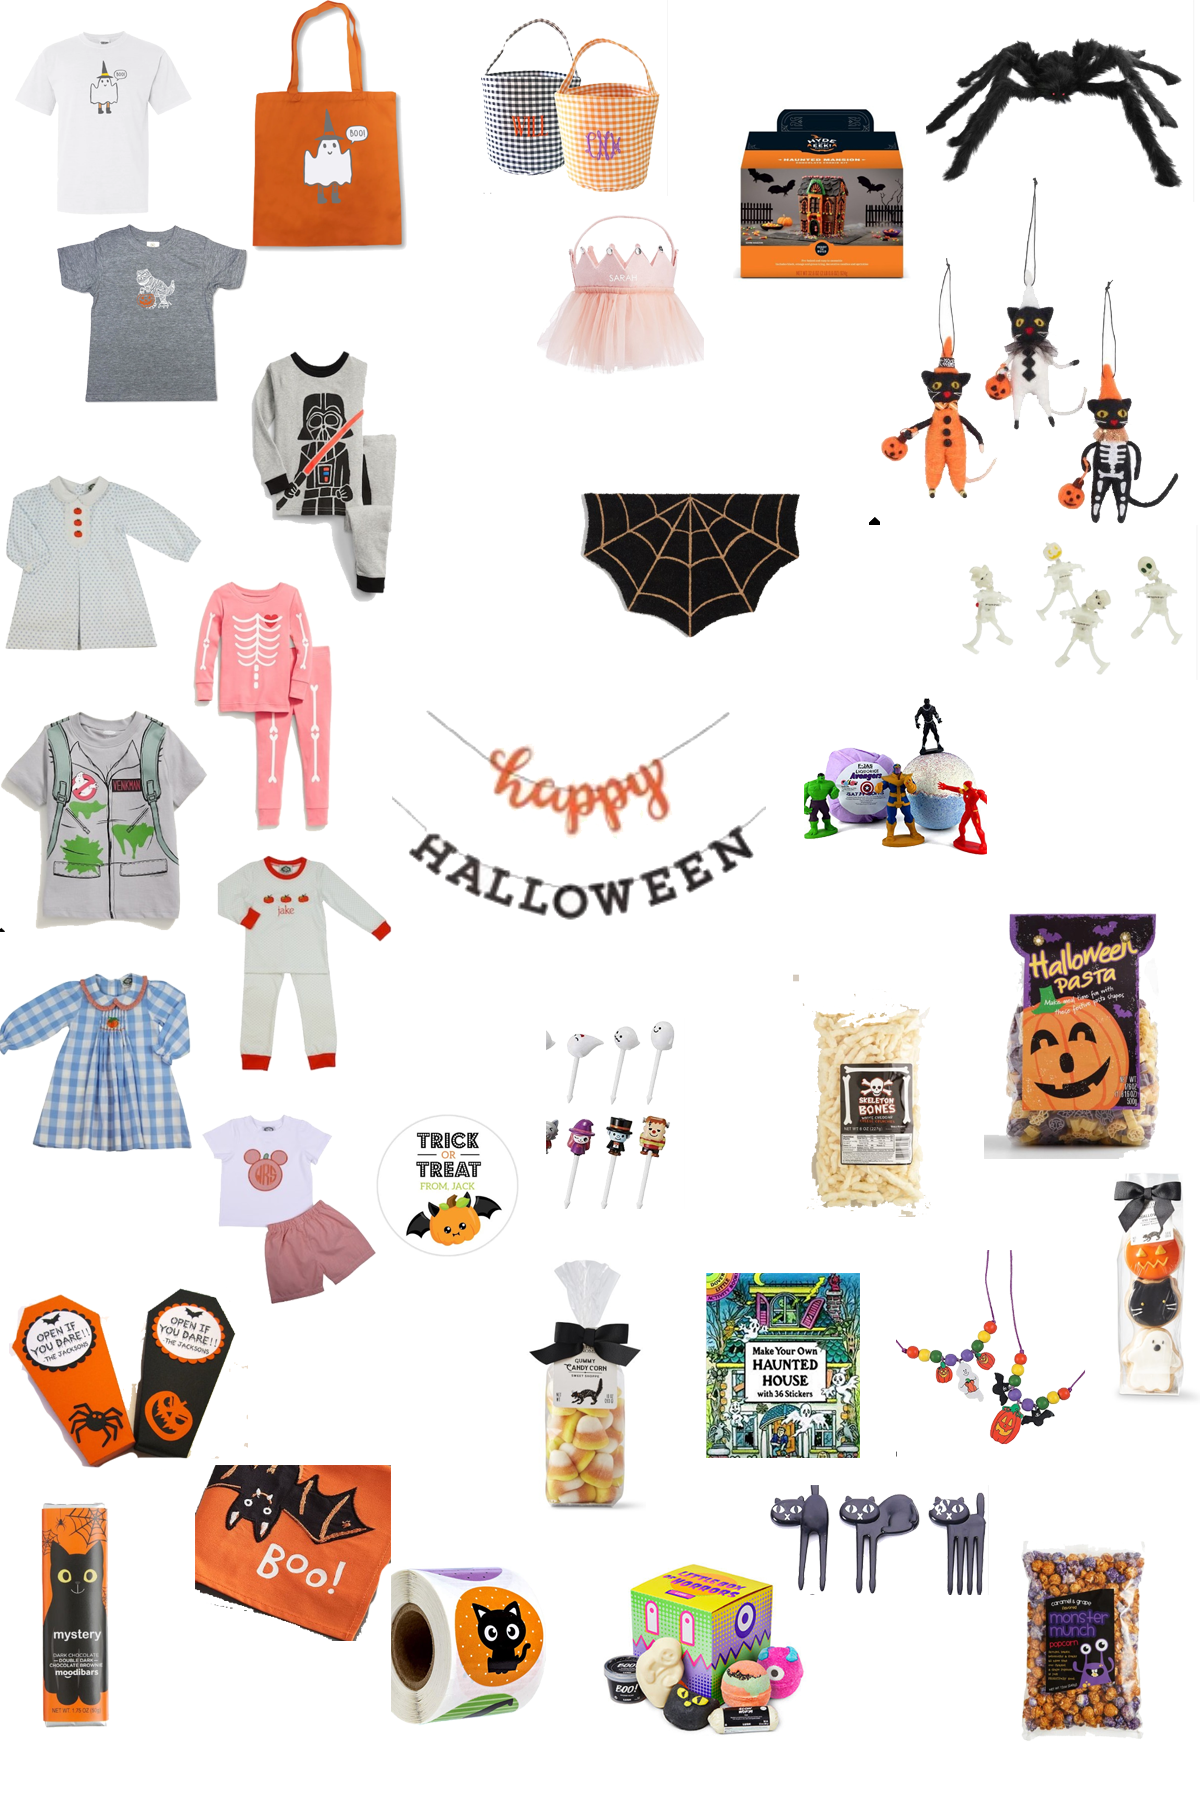 Halloween Treats and Pajamas, books, for kids